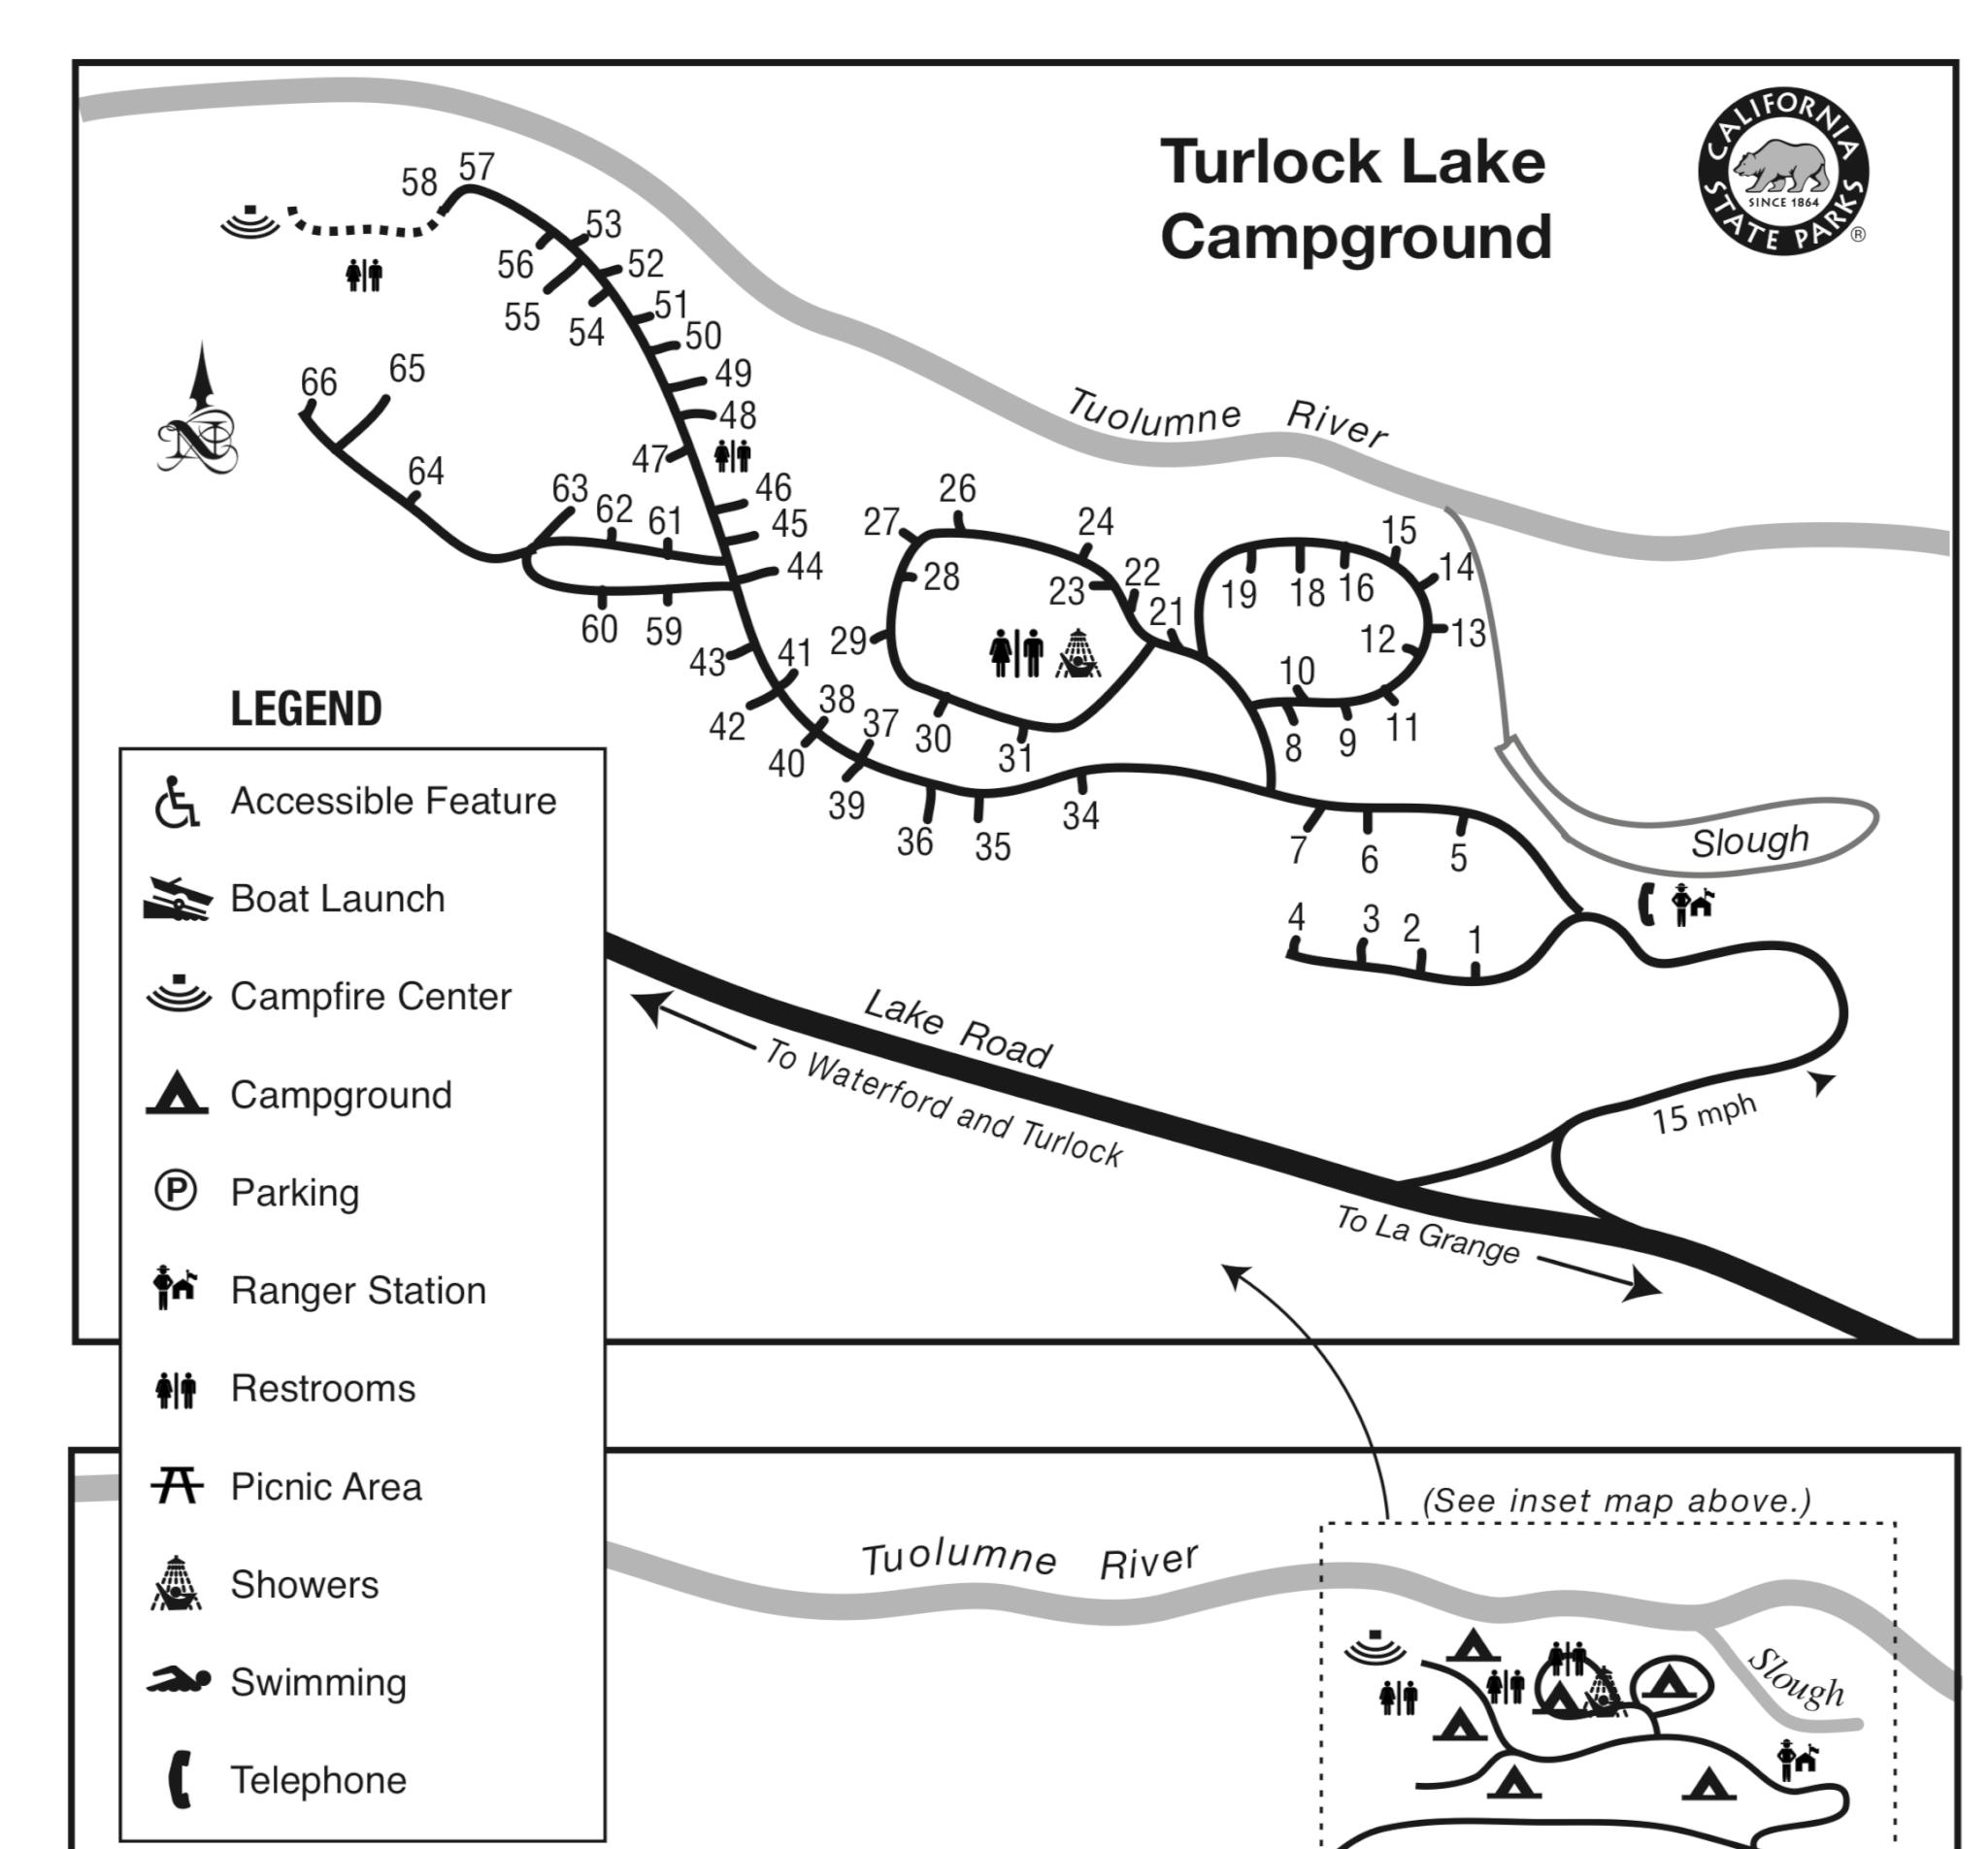 Turlock Lake State Recreation Area - Campsite Photos & Reservations